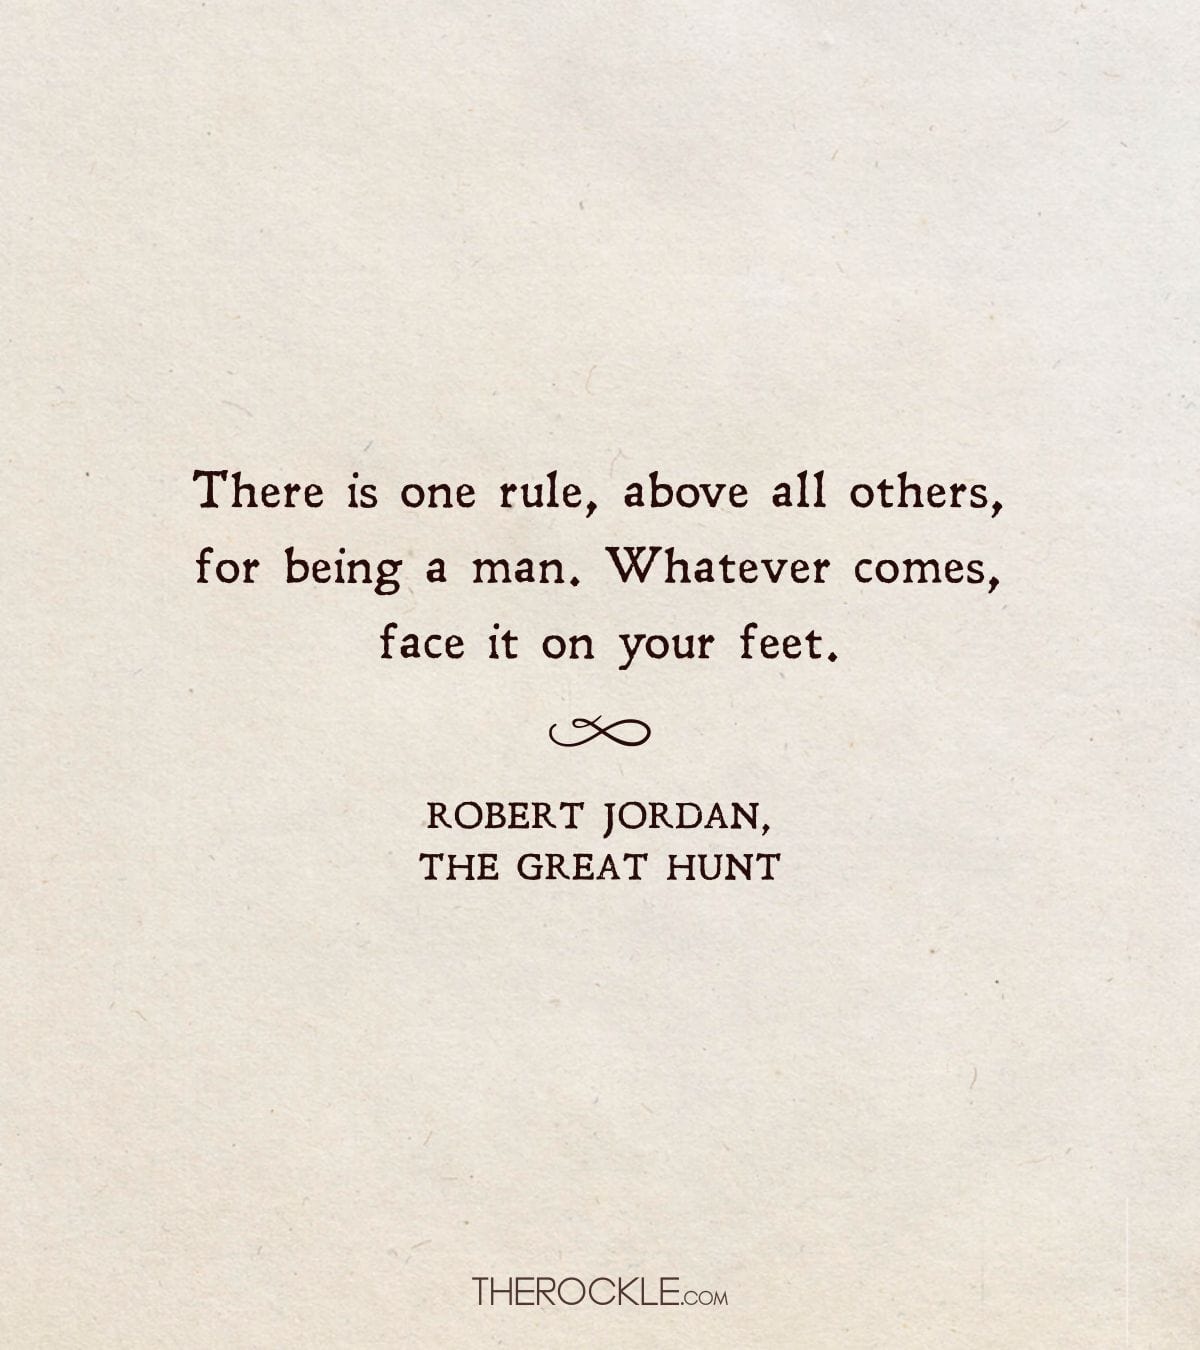 Robert Jordan quote about embracing challenges